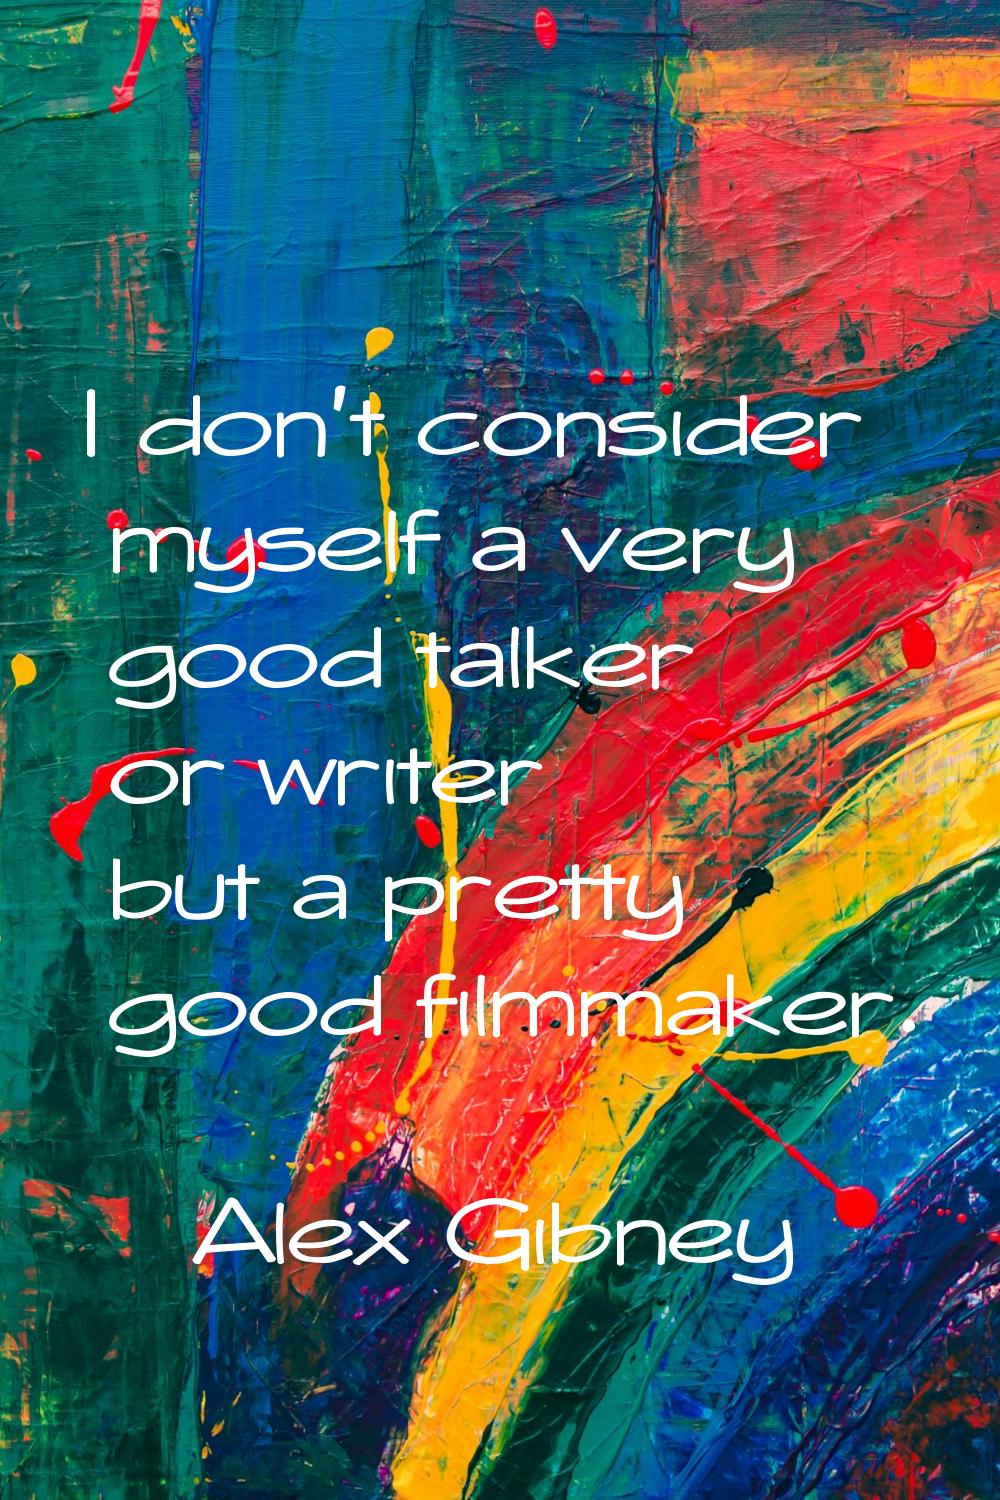 I don't consider myself a very good talker or writer but a pretty good filmmaker.